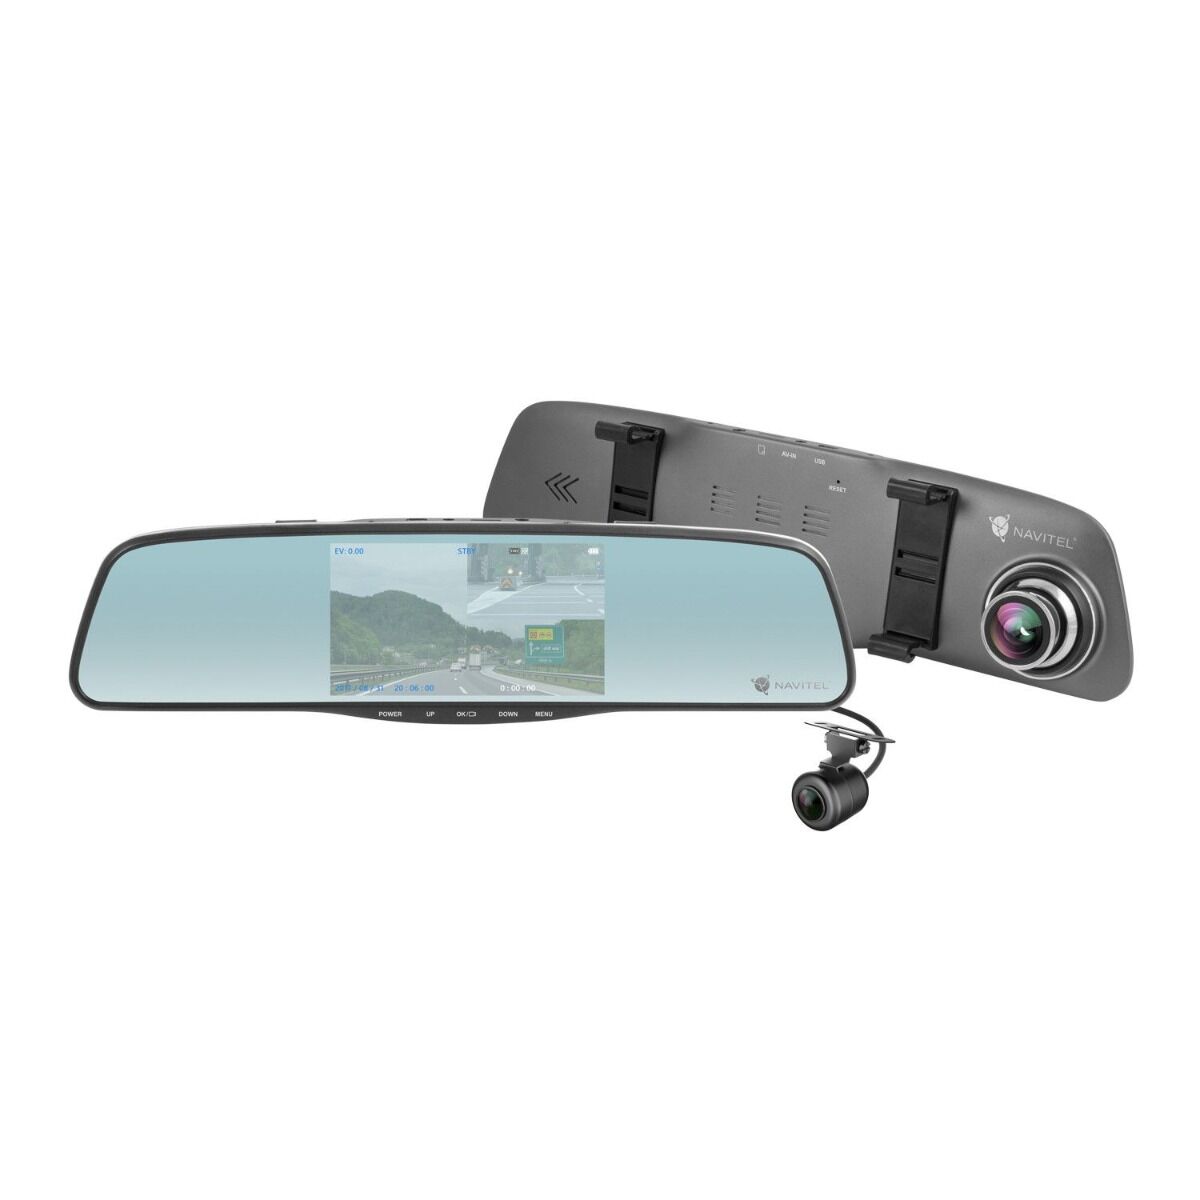 Camera Auto DVR CMR300 Navitel, Fixare pe oglinda retovizoare, Ecran 5